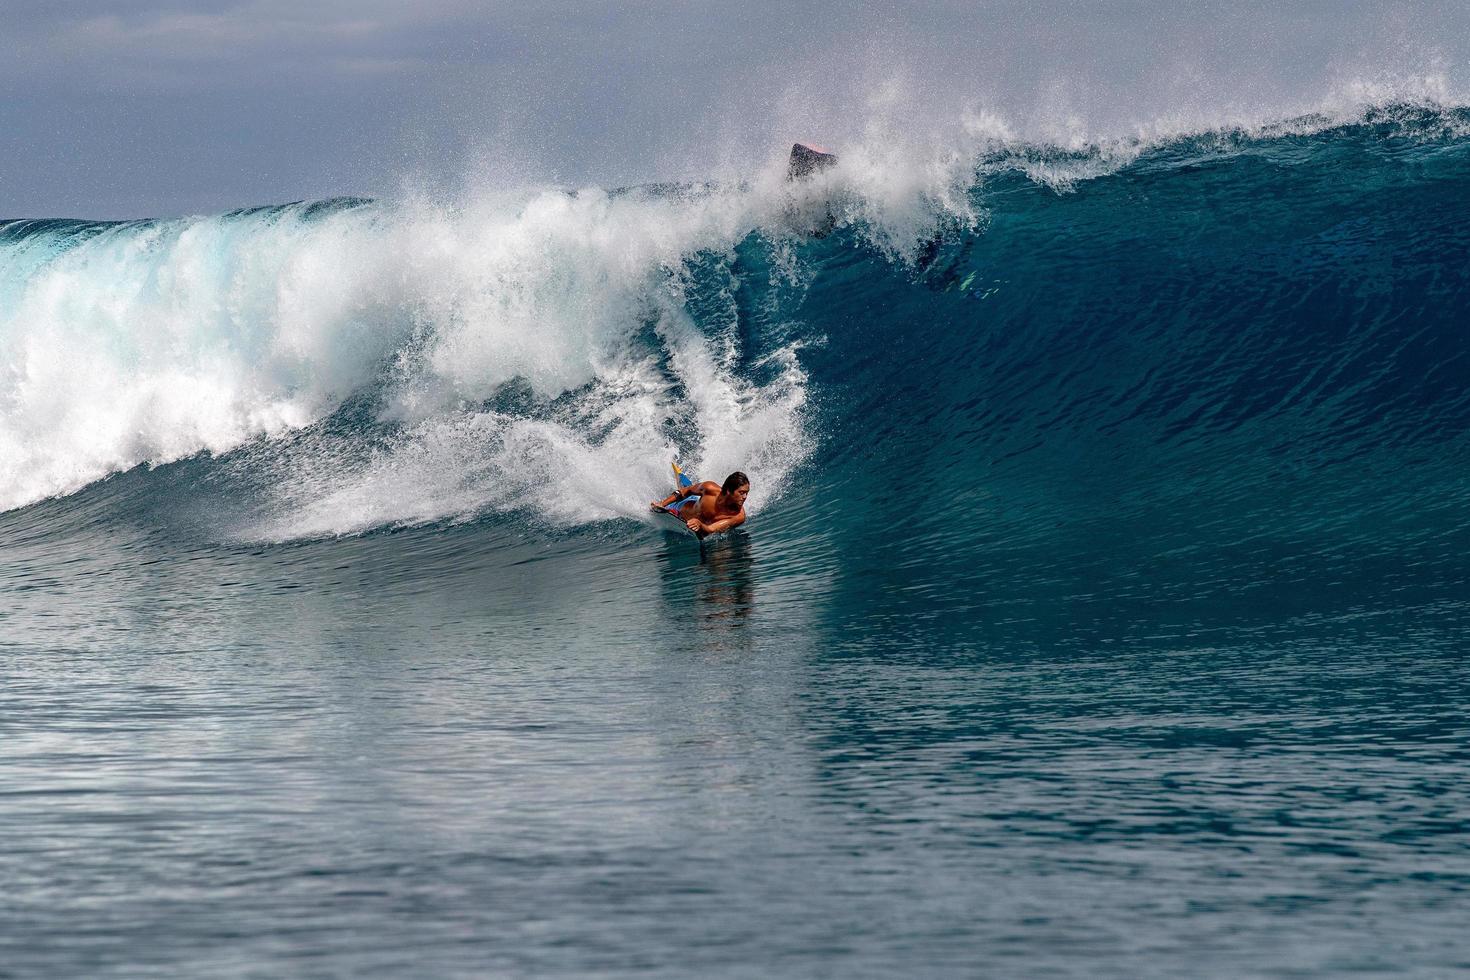 Tahiti, Frans Polynesië - augustus 5 2018 - surfer opleiding dagen voordat billabong Tahiti wedstrijd Bij theehupoo rif foto